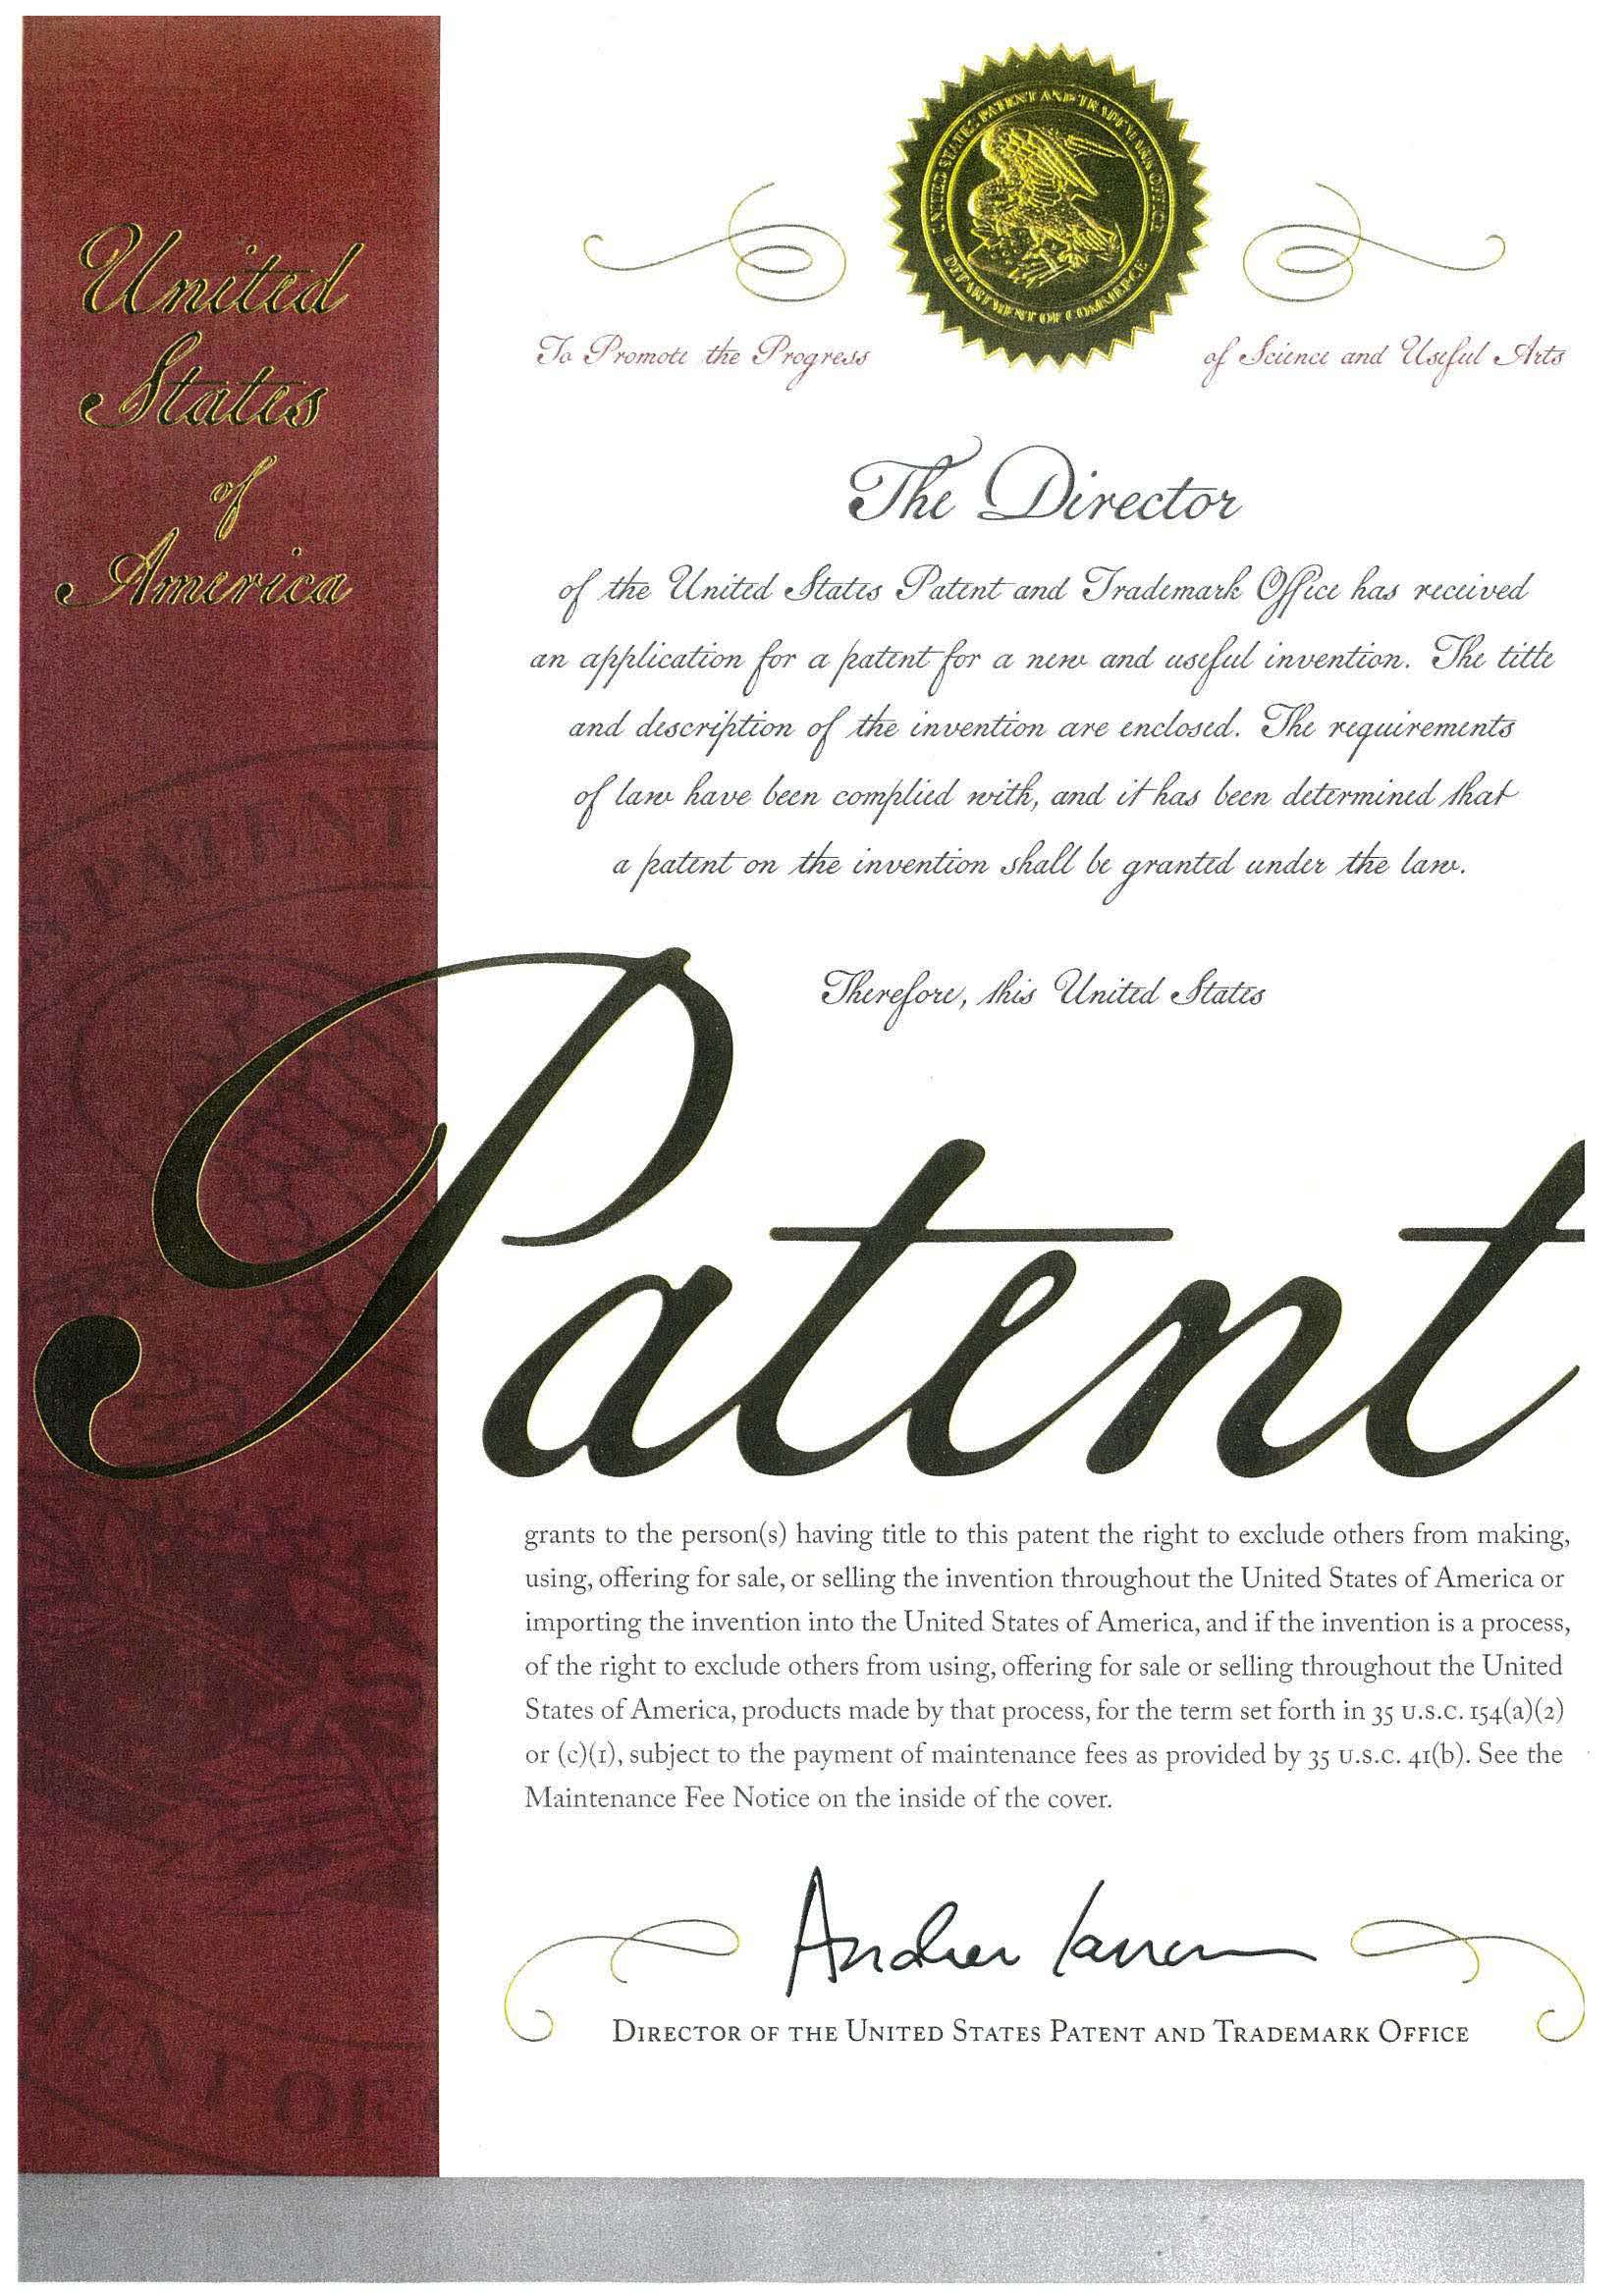 United States Patent